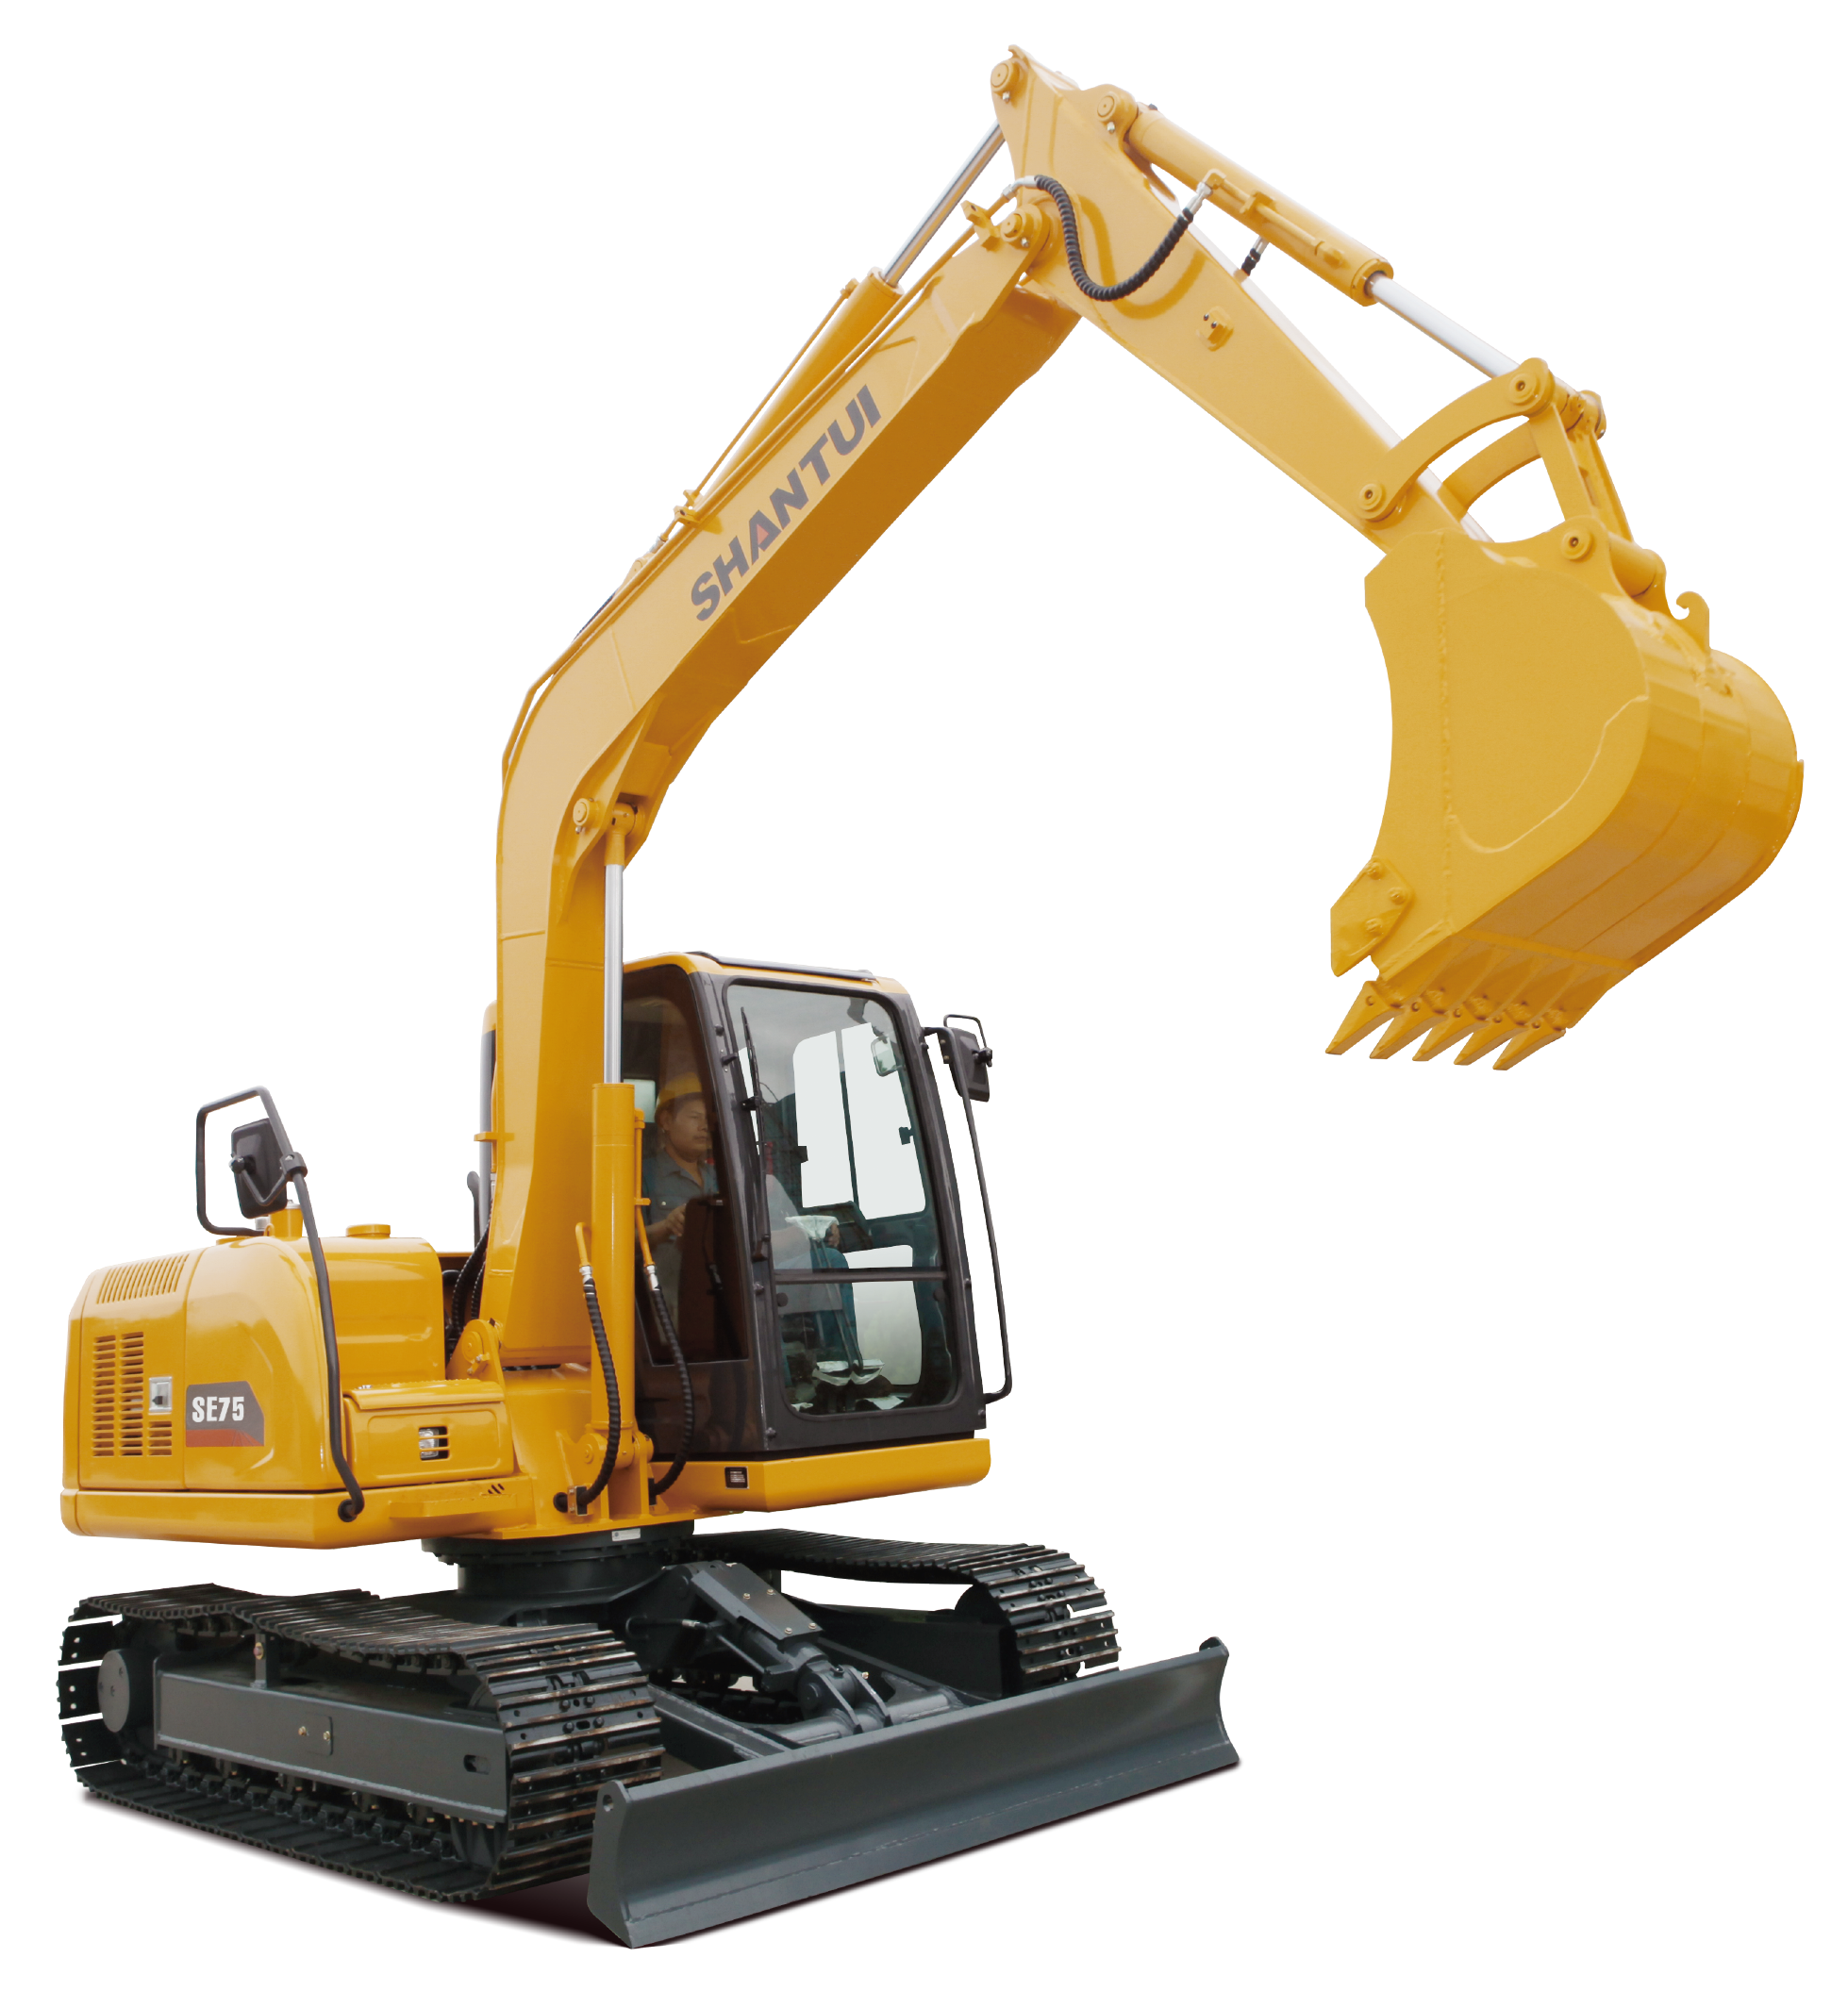 Shantui official 7.5 ton multifunction mini excavator SE75